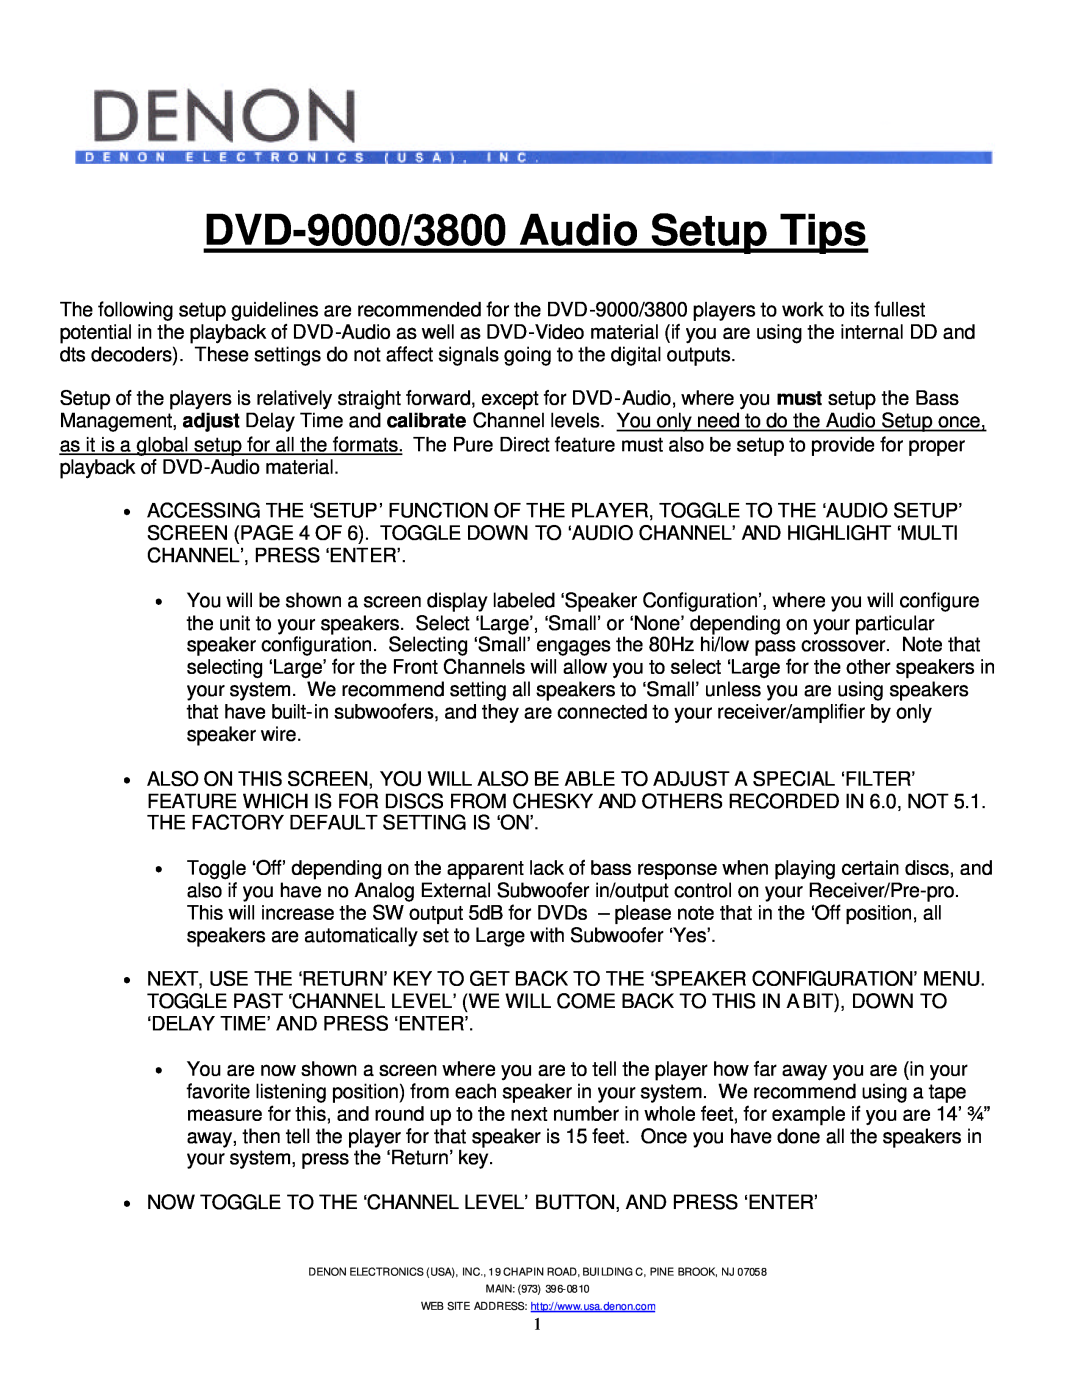 Denon setup guide DVD-9000/3800 Audio Setup Tips 